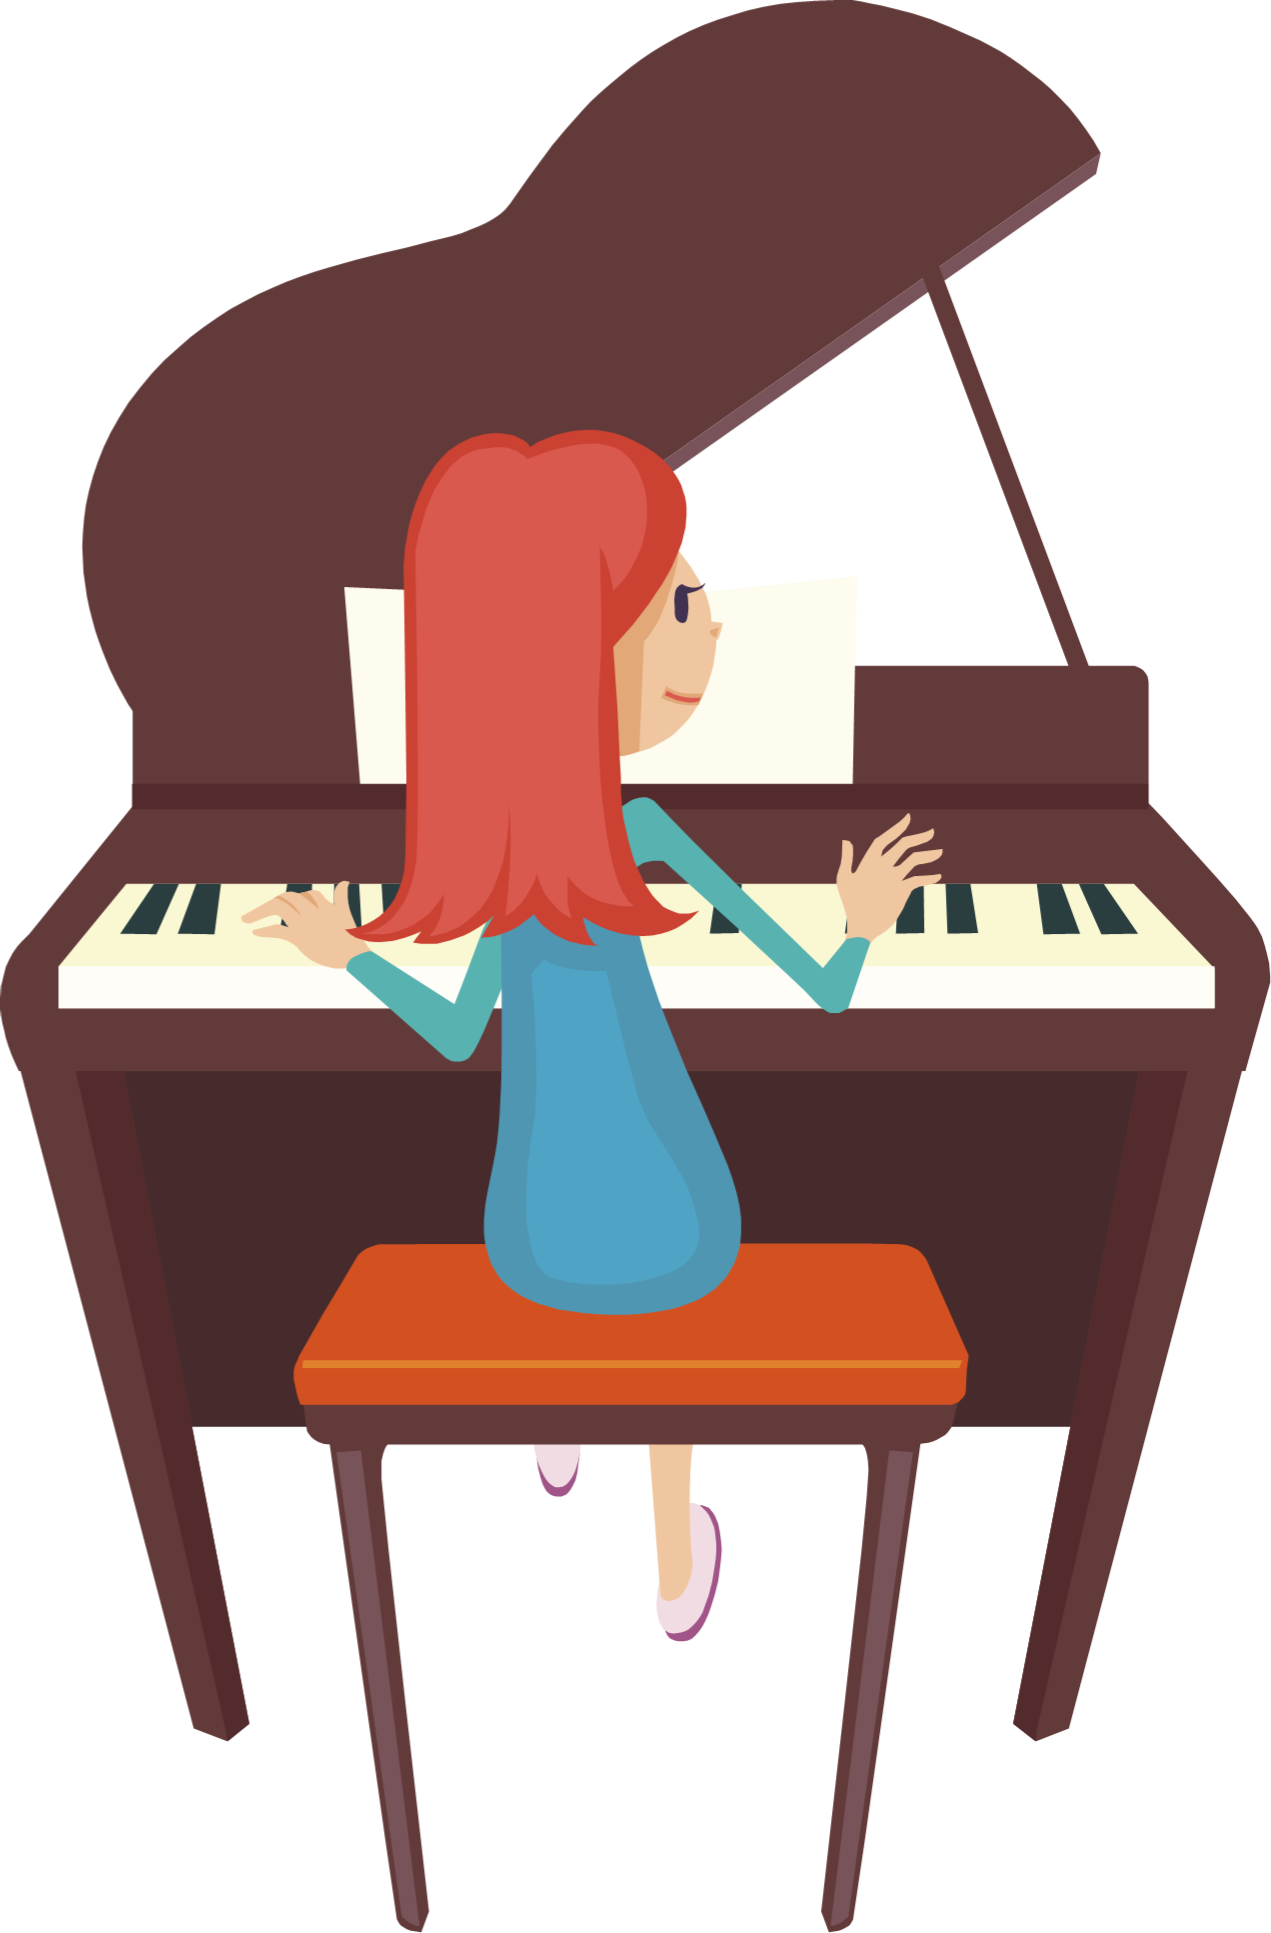 piano player cartoon